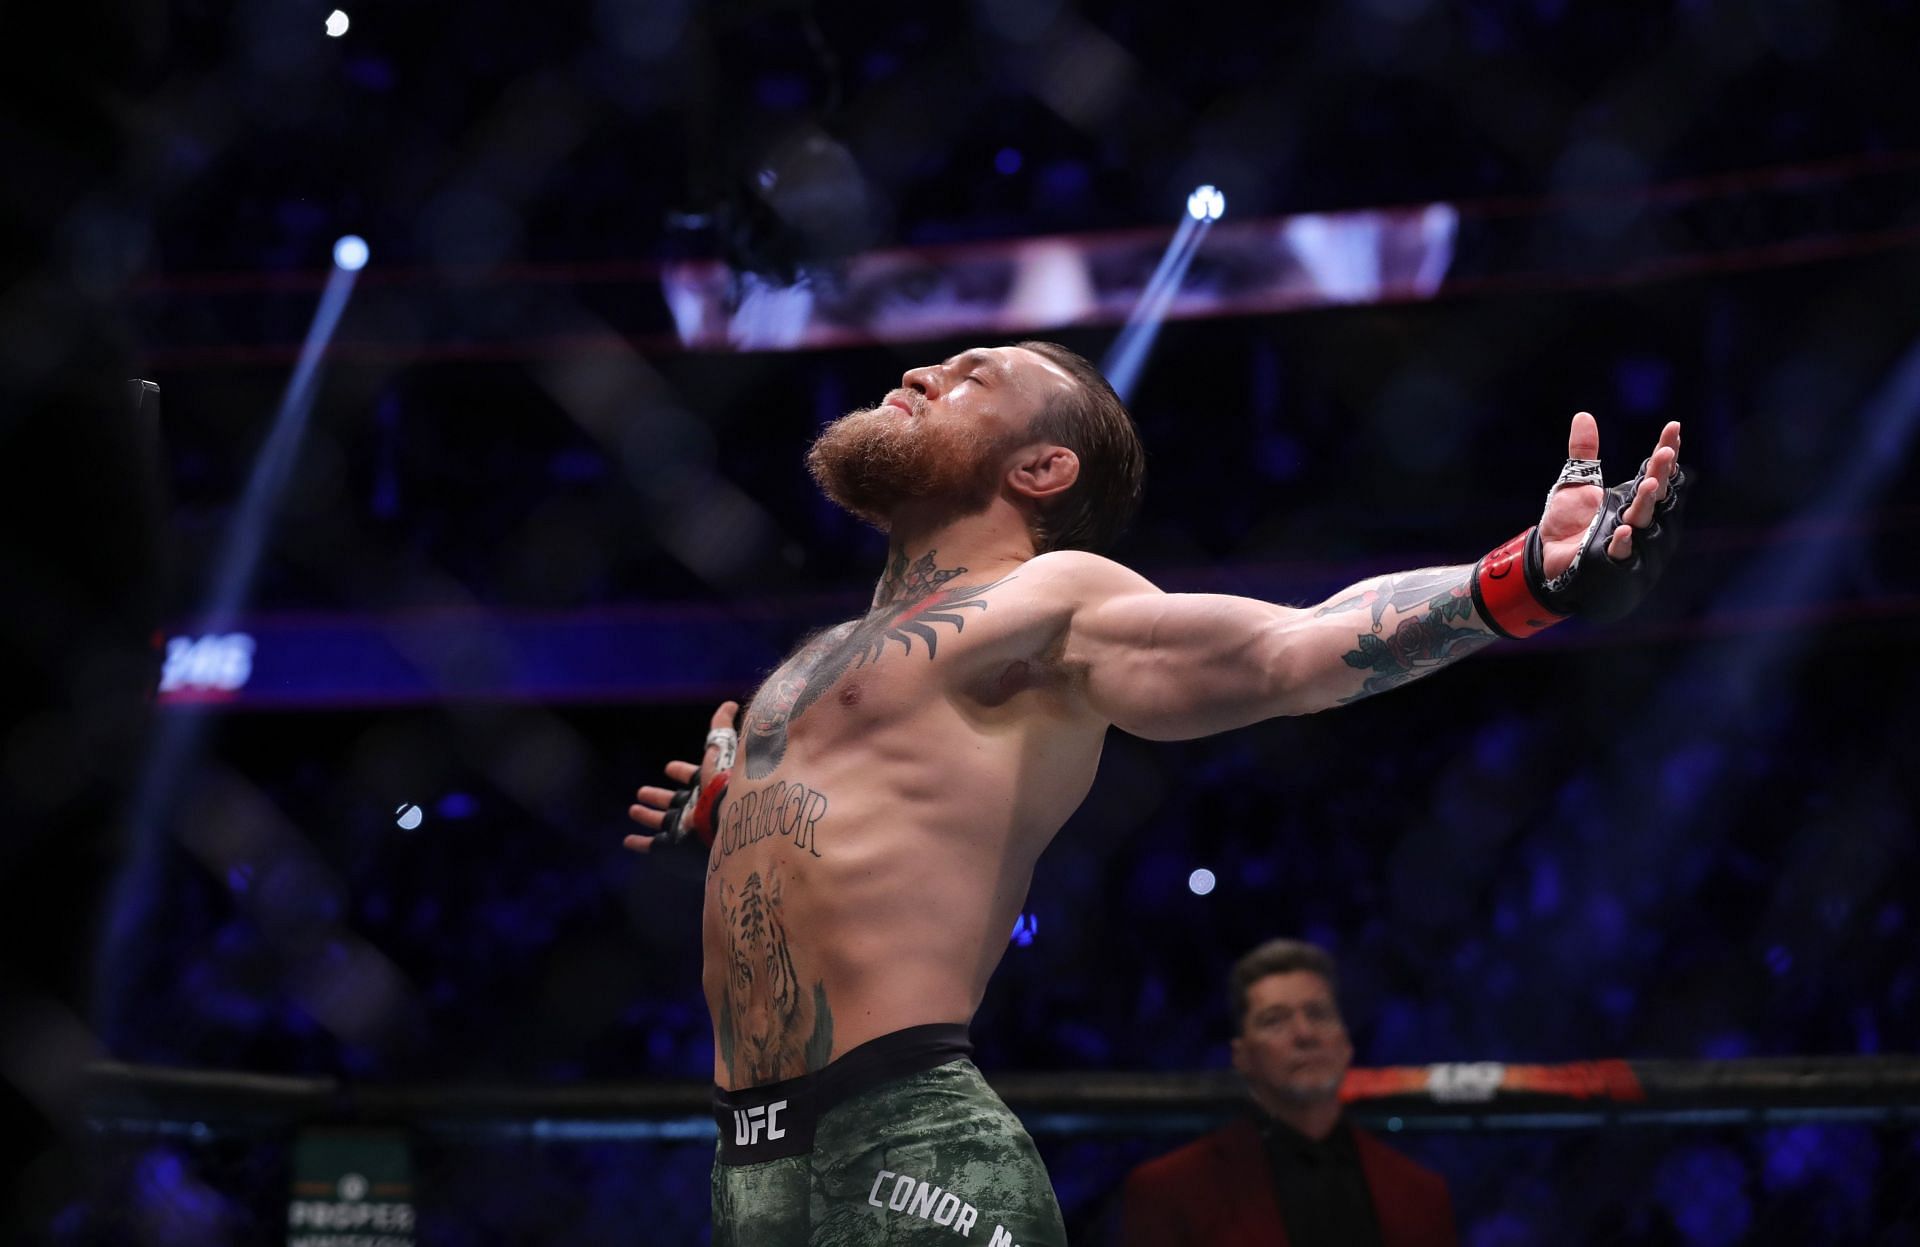 UFC lightweight superstar Conor McGregor